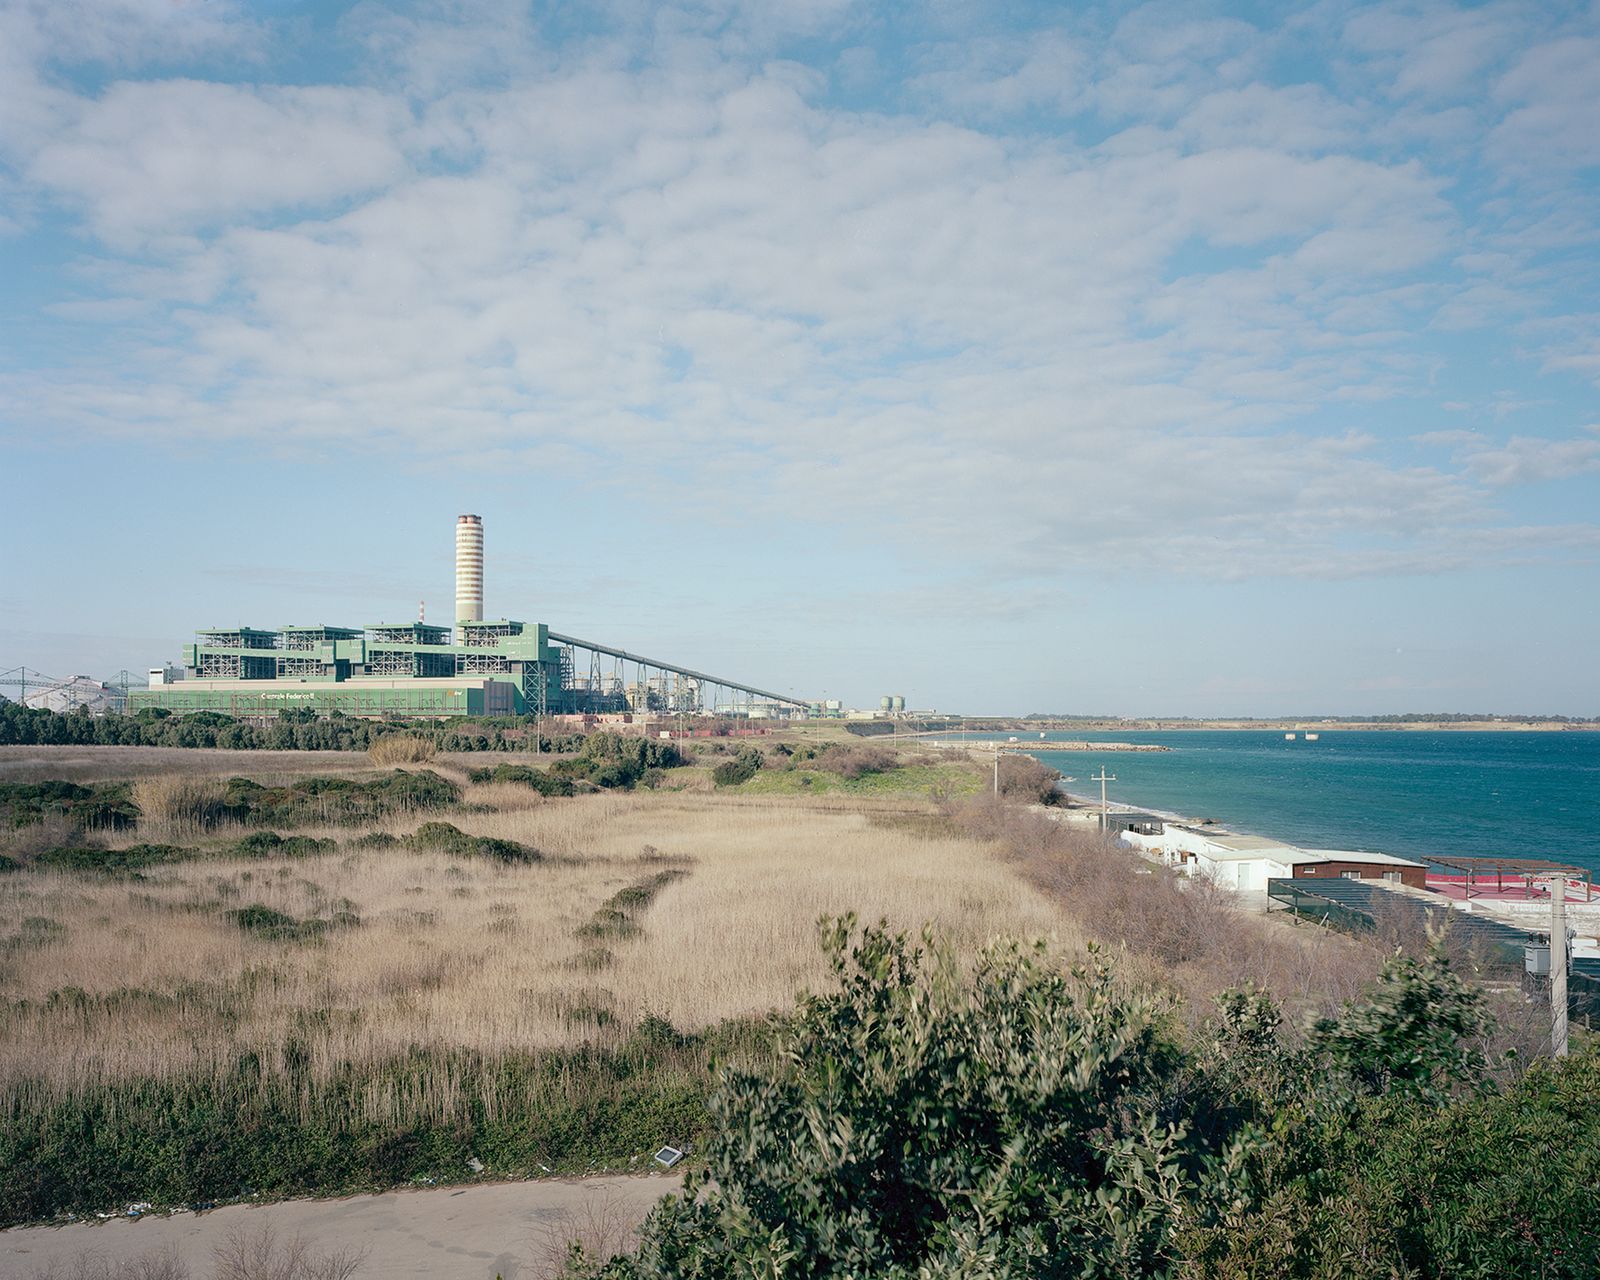 © Pietro Viti - Federico II coal fired thermal plant, the second biggest coal plant in Europe. Cerano, Brindisi, 2015.